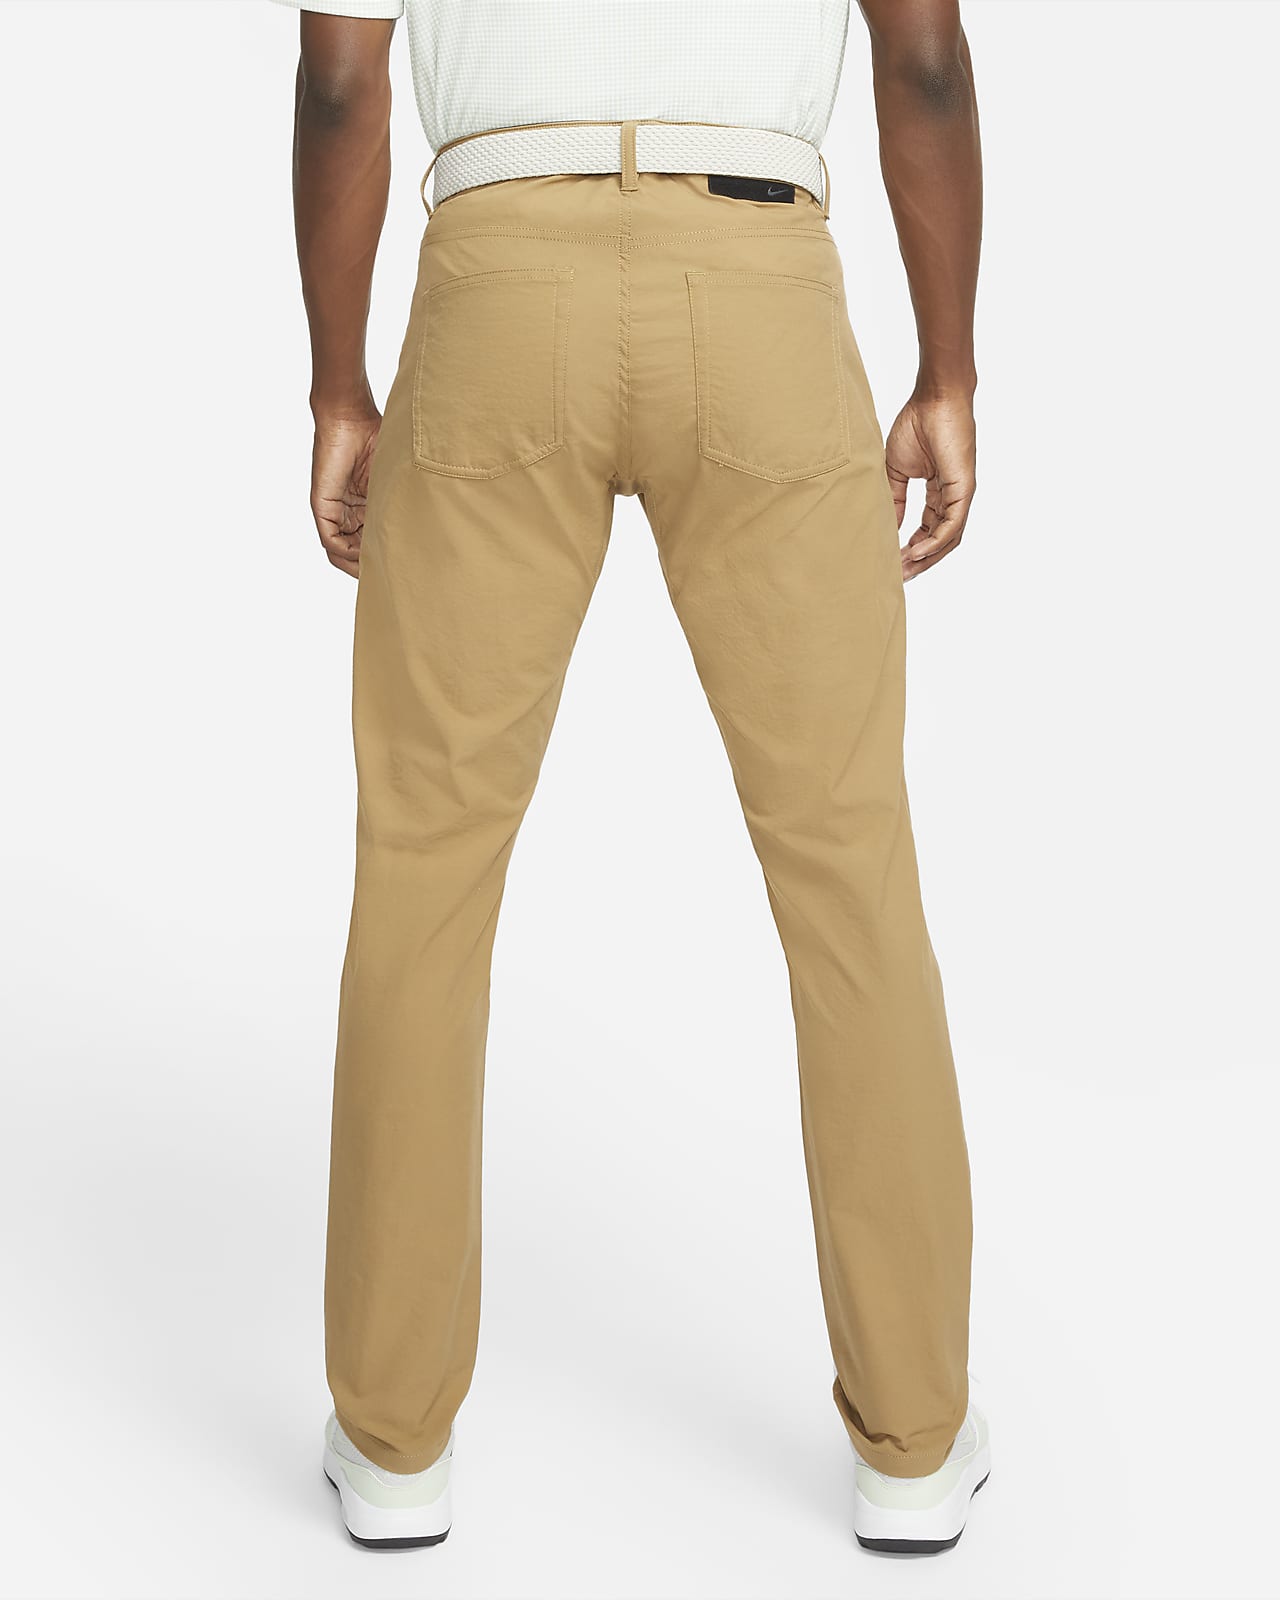 very nice Shrink Medal Nike Dri-FIT Repel Men's 5-Pocket Slim Fit Golf Pants. Nike.com